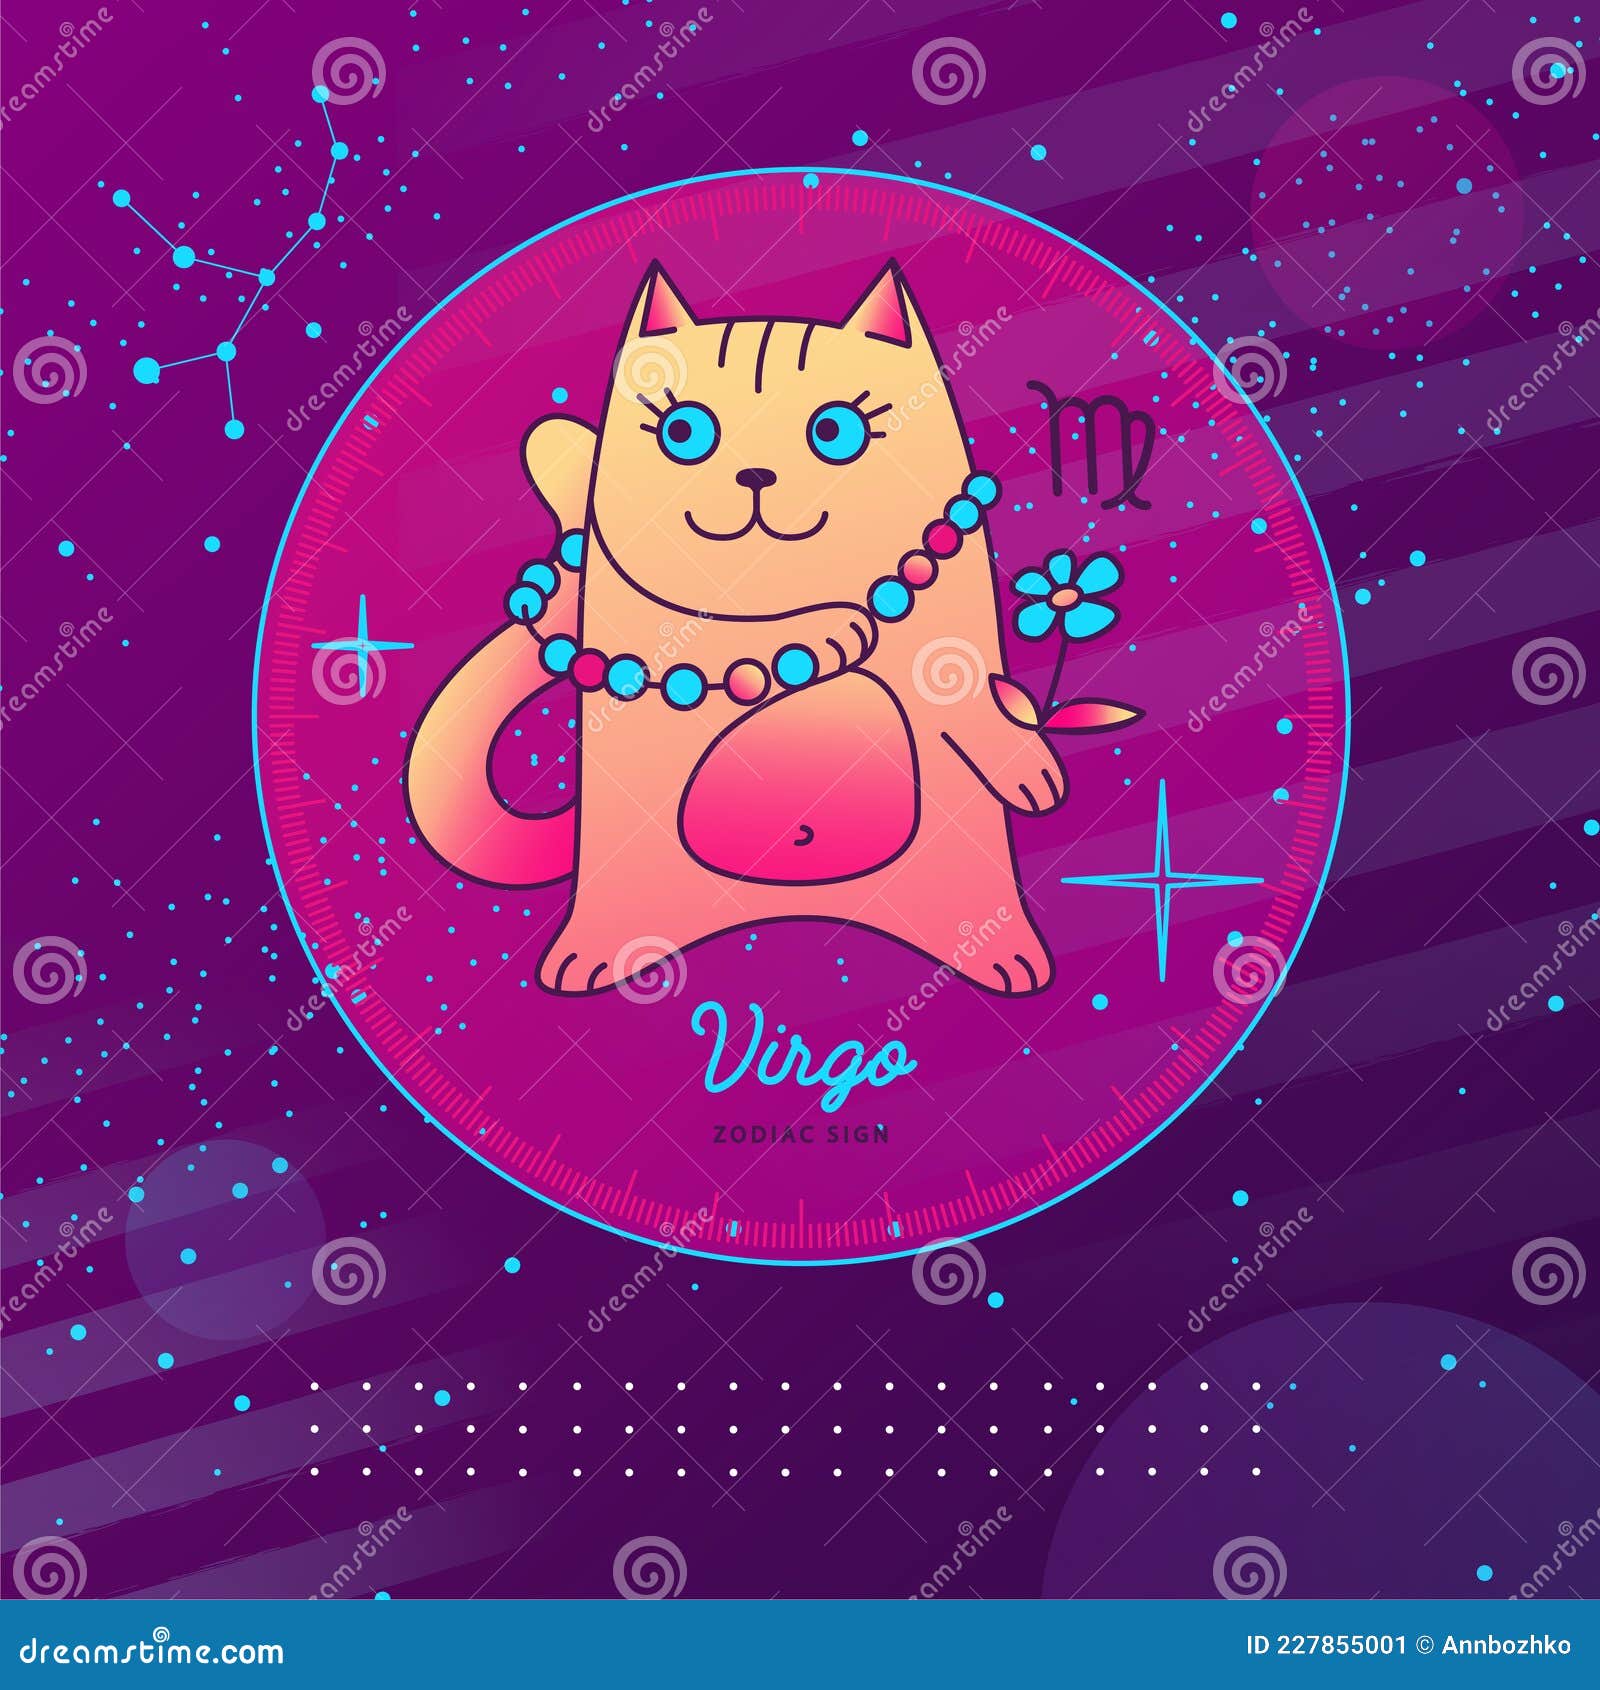 https://thumbs.dreamstime.com/z/modern-magic-witchcraft-card-astrology-virgo-zodiac-sign-cartoon-funny-cat-227855001.jpg